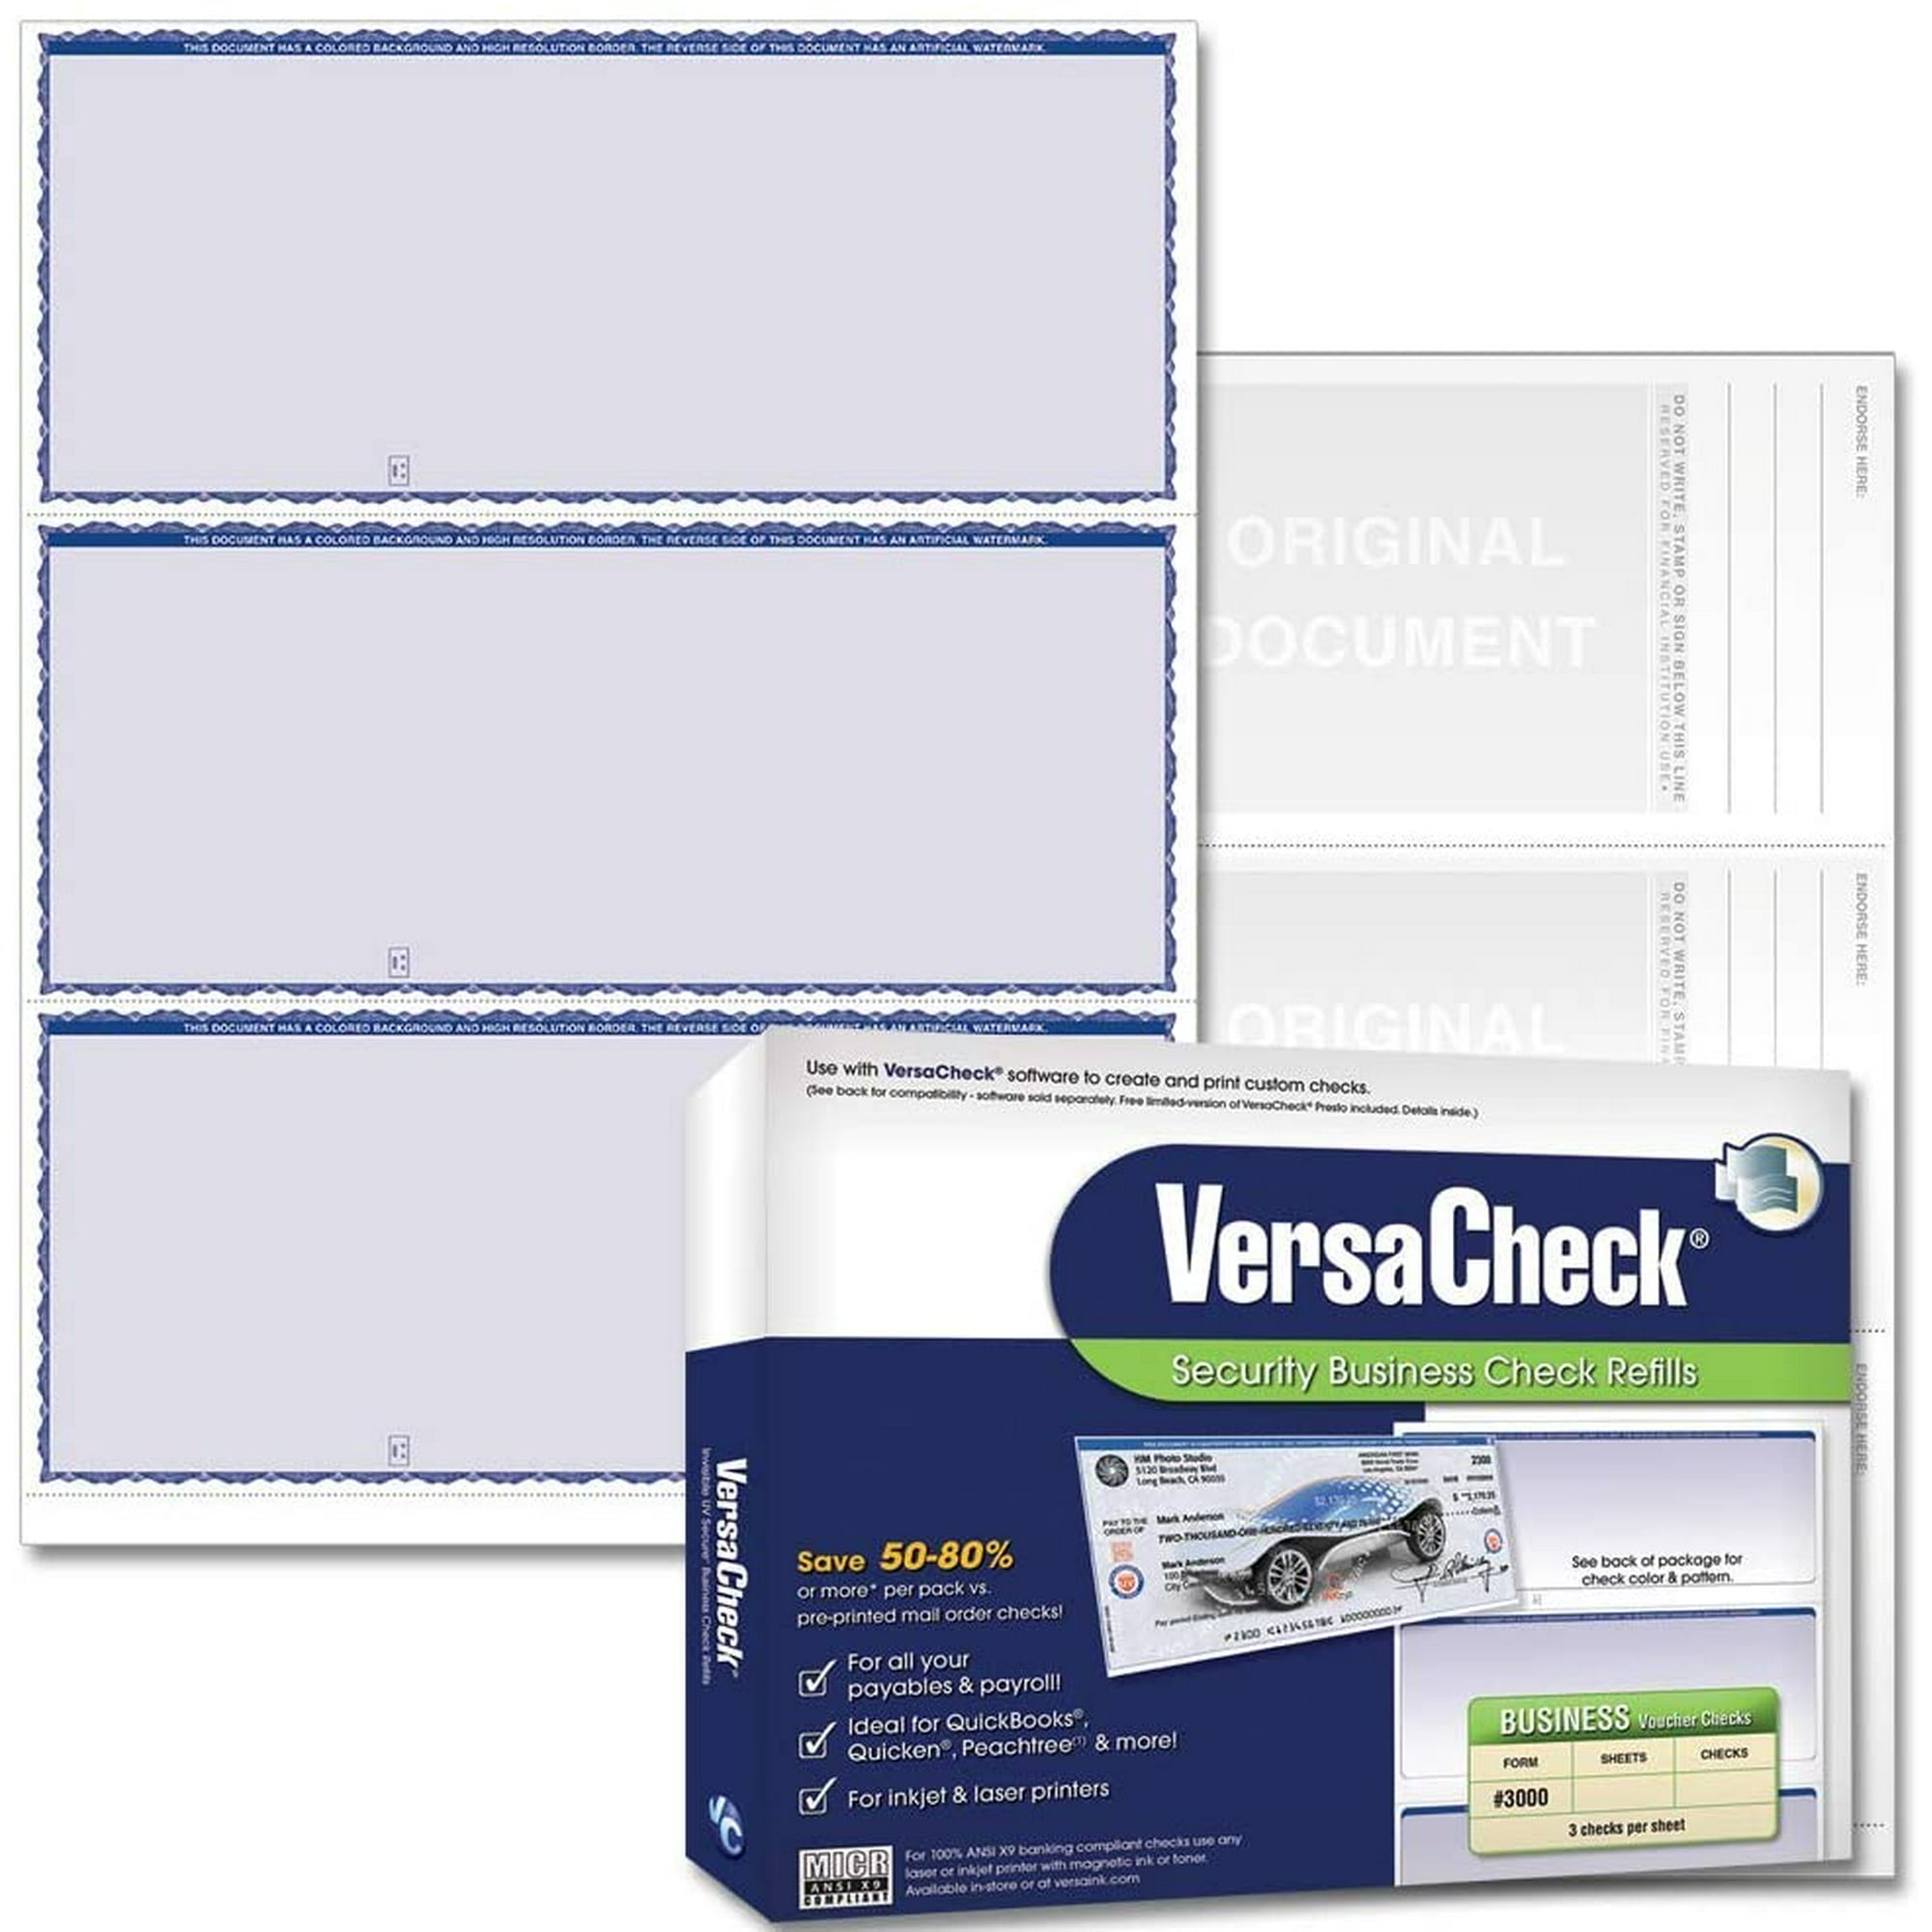 VersaCheck® Security Business Check Refills: Form # 22